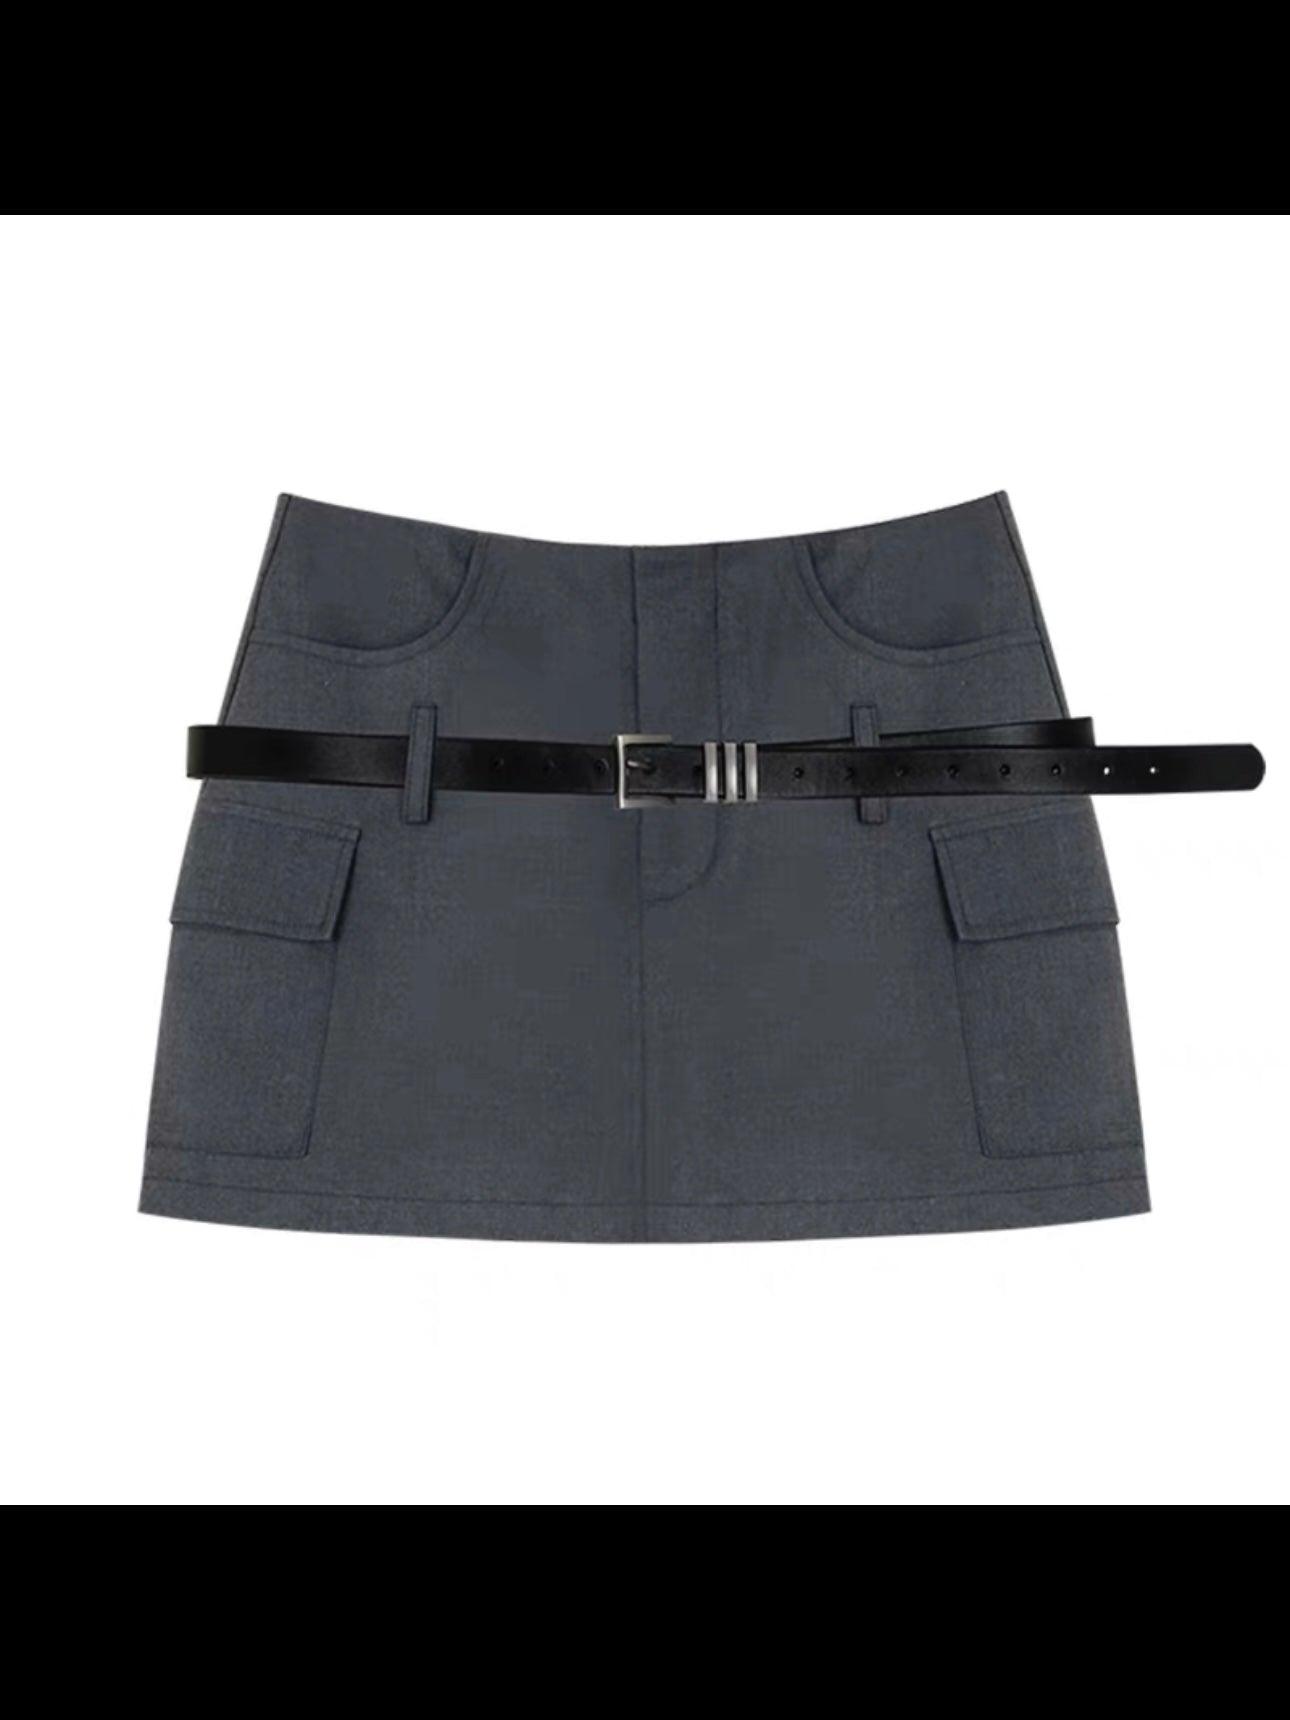 lovevop Grey Belt Safety Pants Wrap Short Skirt